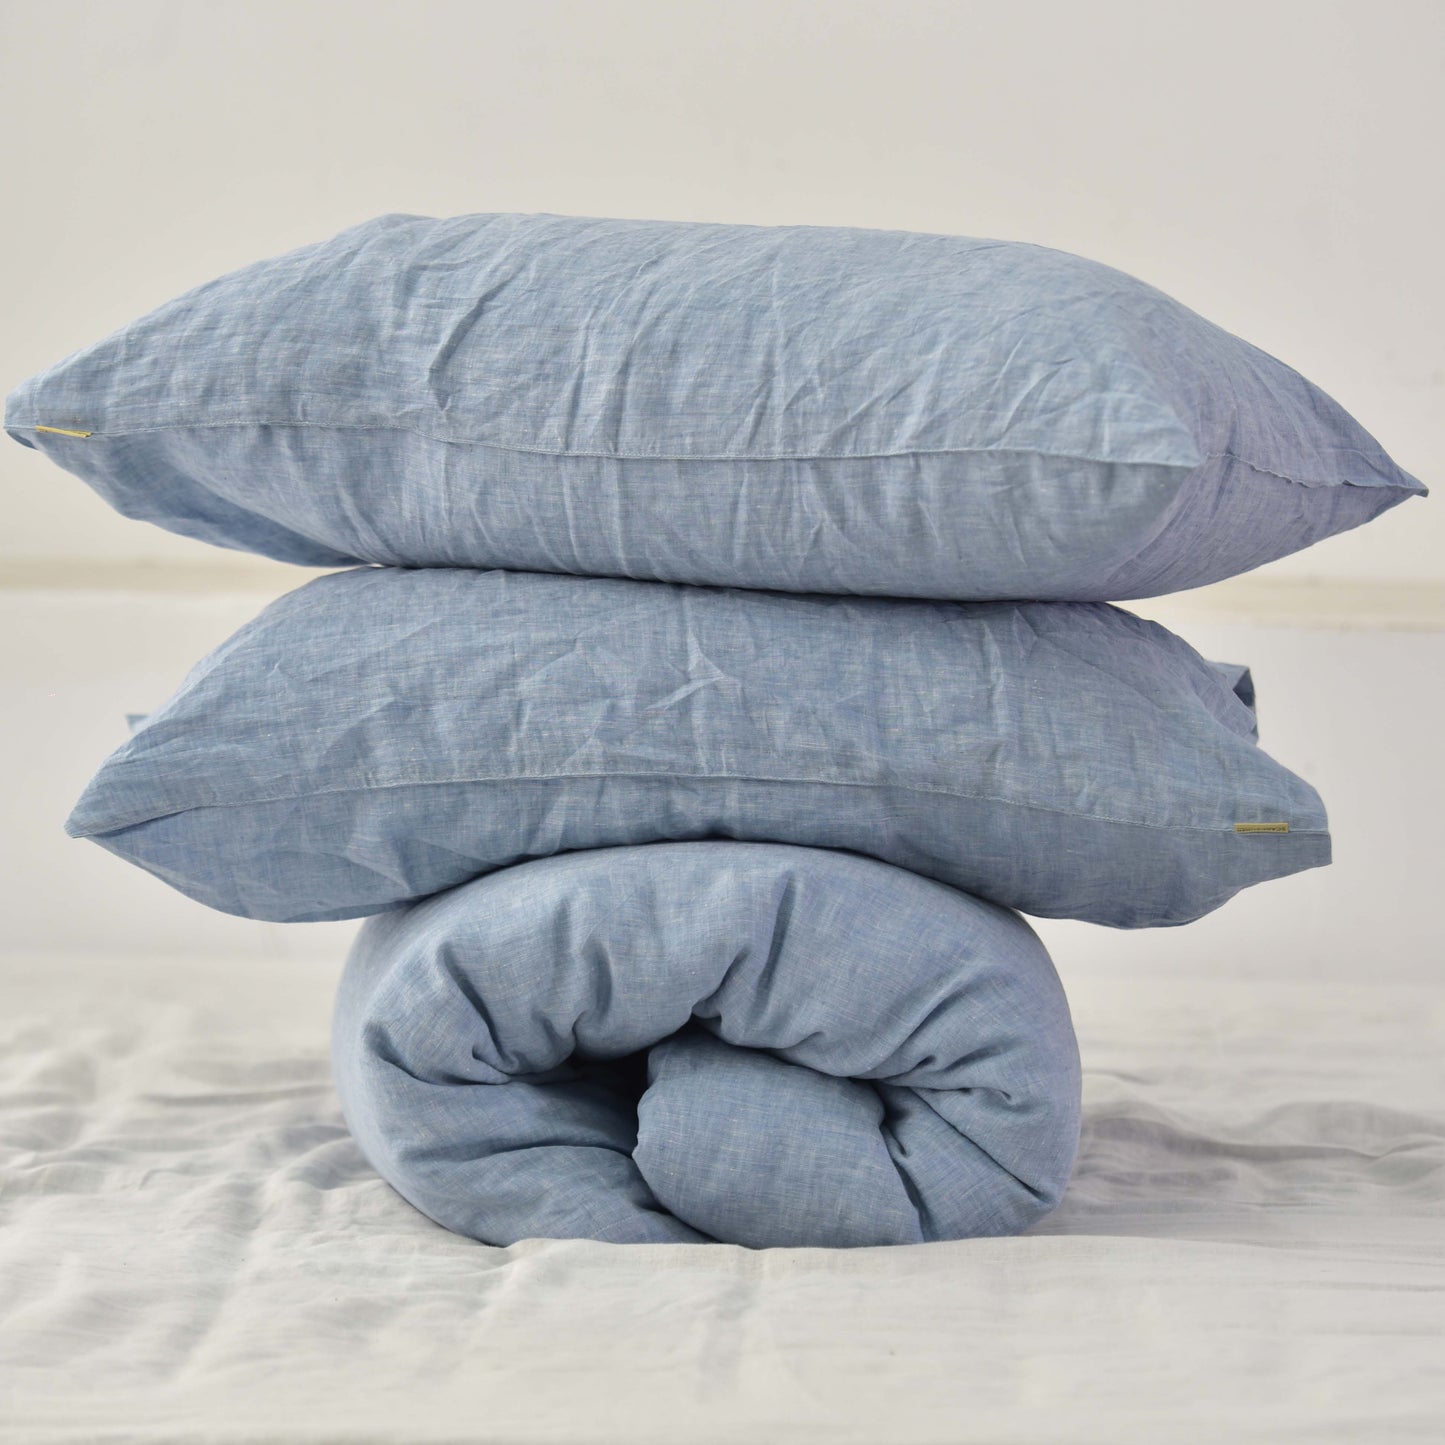 Blue French Linen Duvet Cover+2 Pillowcases Set - Yarn Dyeing 42